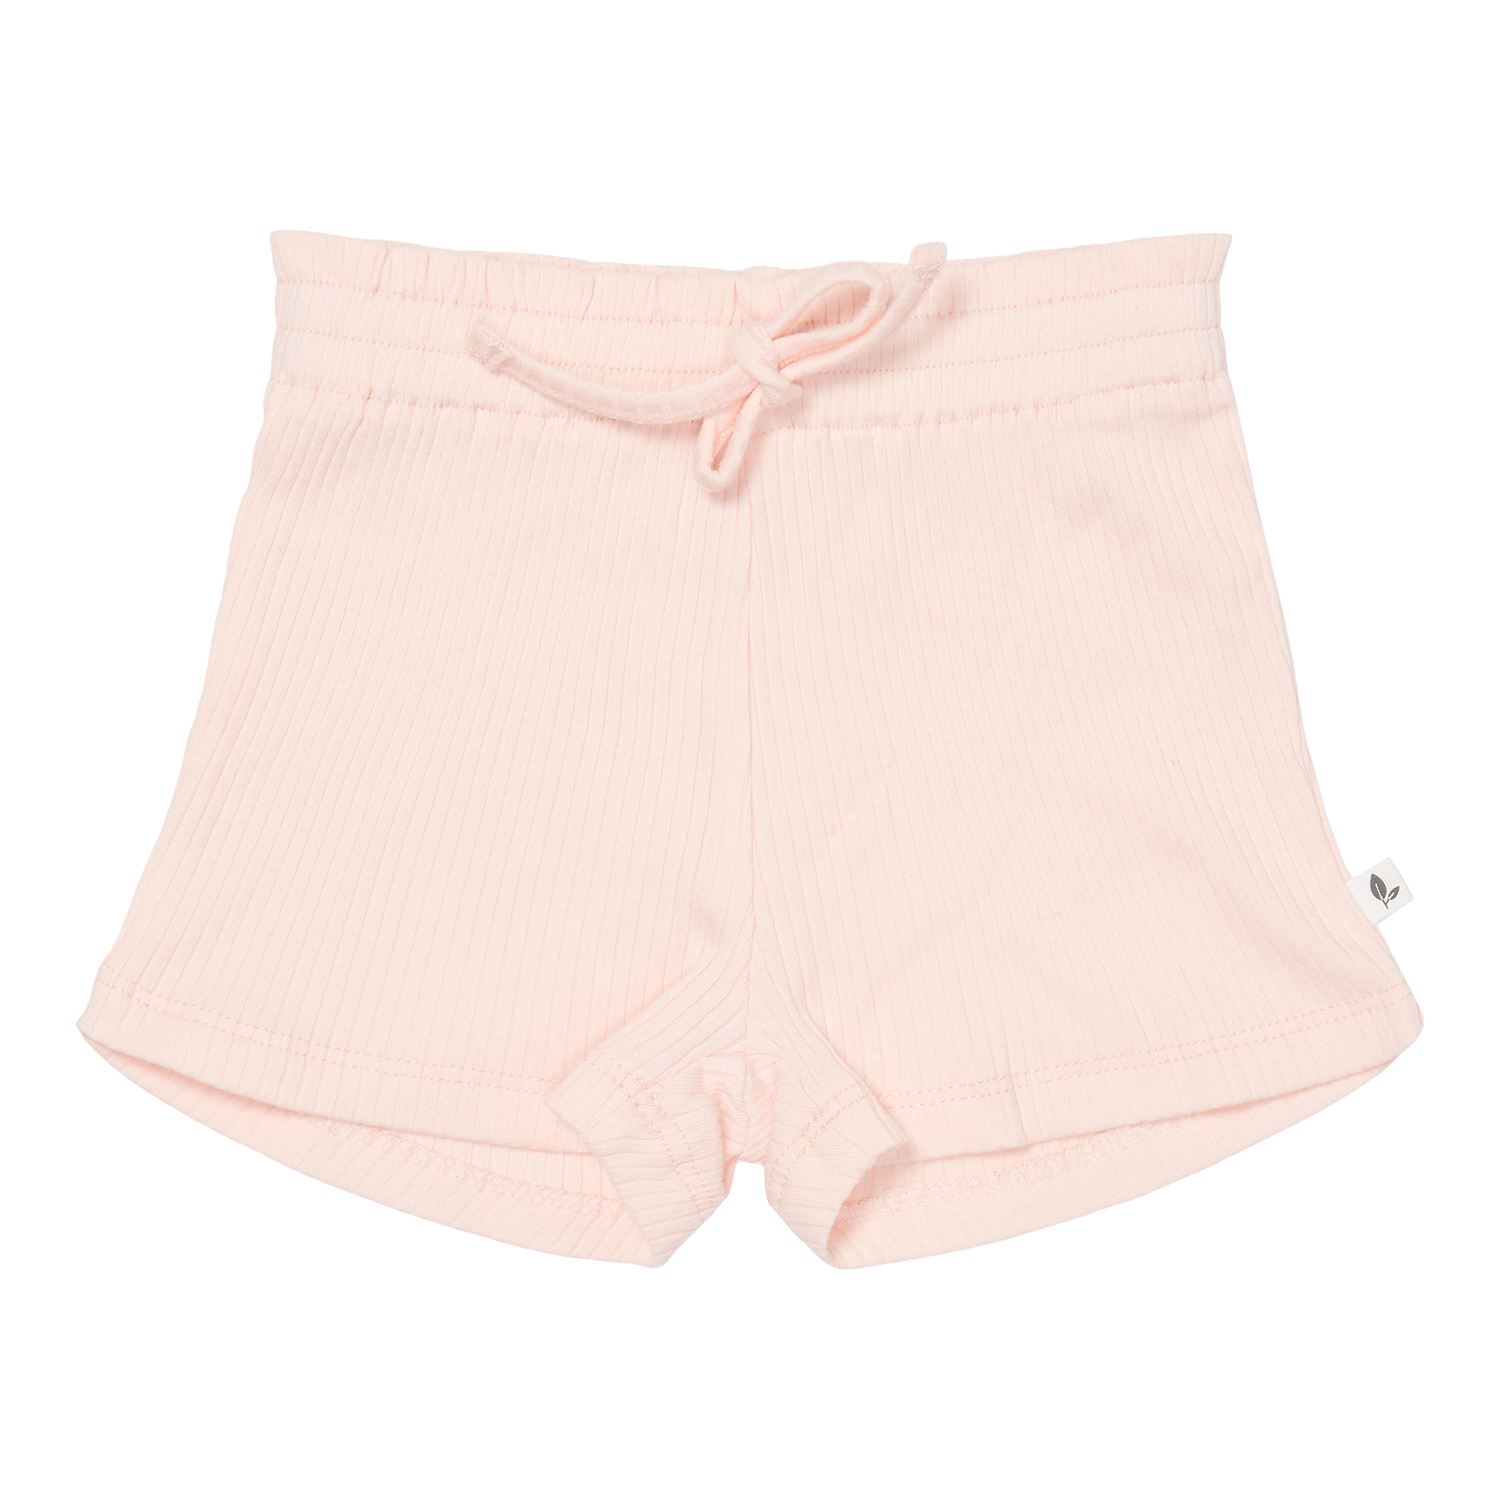 Kurze Hose / Shorts Rippe Pure soft pink (Gr. 68)